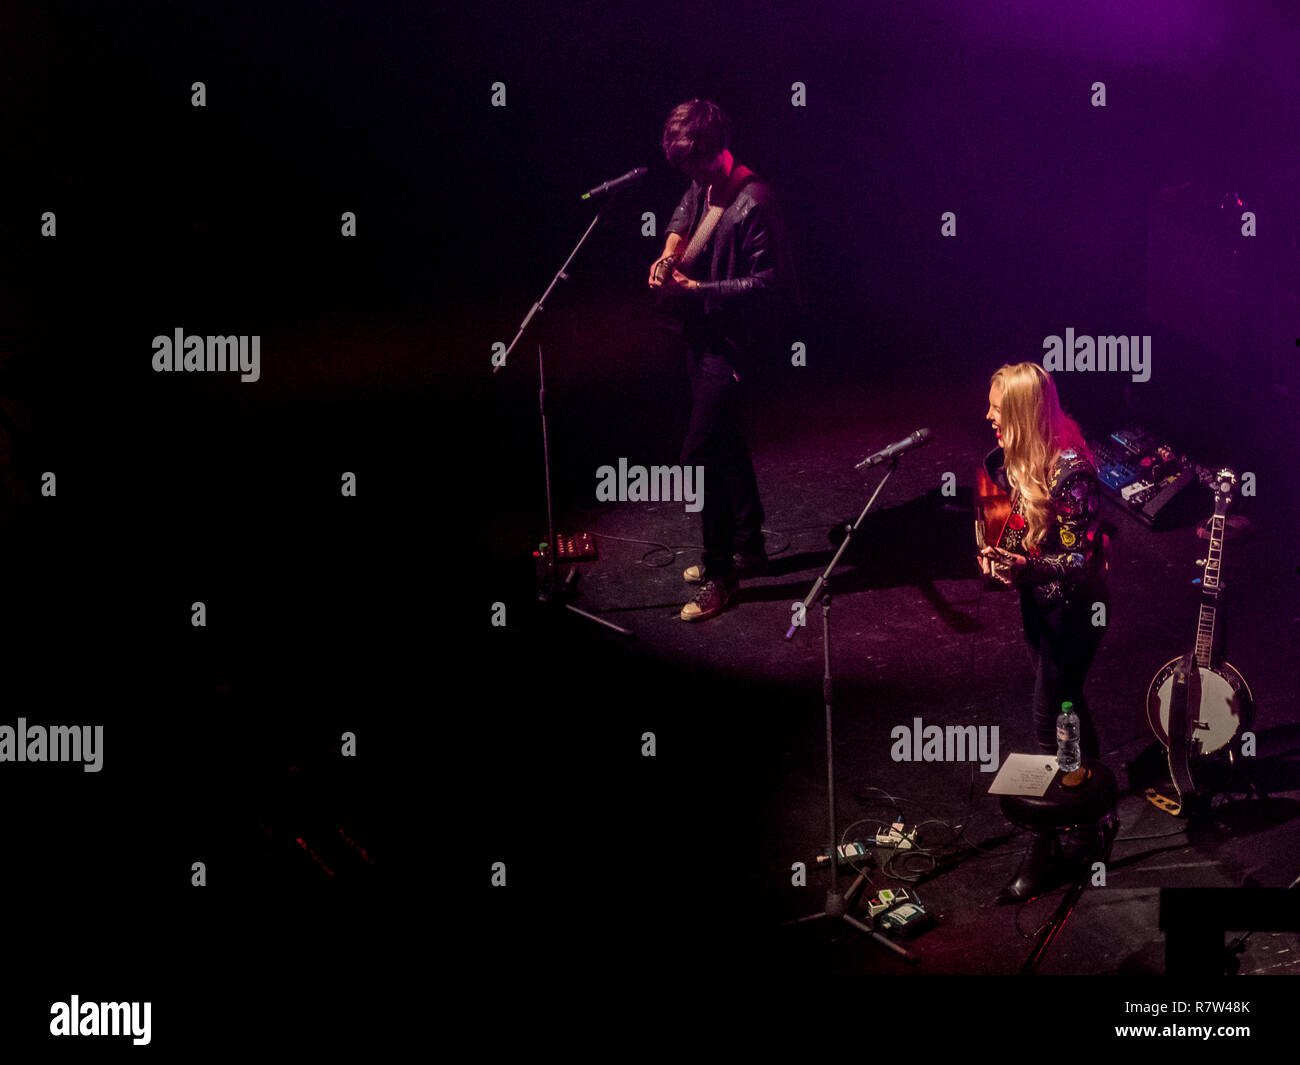 Dal vivo sul palco Ashley Campbell esegue un tributo a suo padre Glen Campbell durante il Country 2 Country Music Festival Arena O2 London Inghilterra England Foto Stock